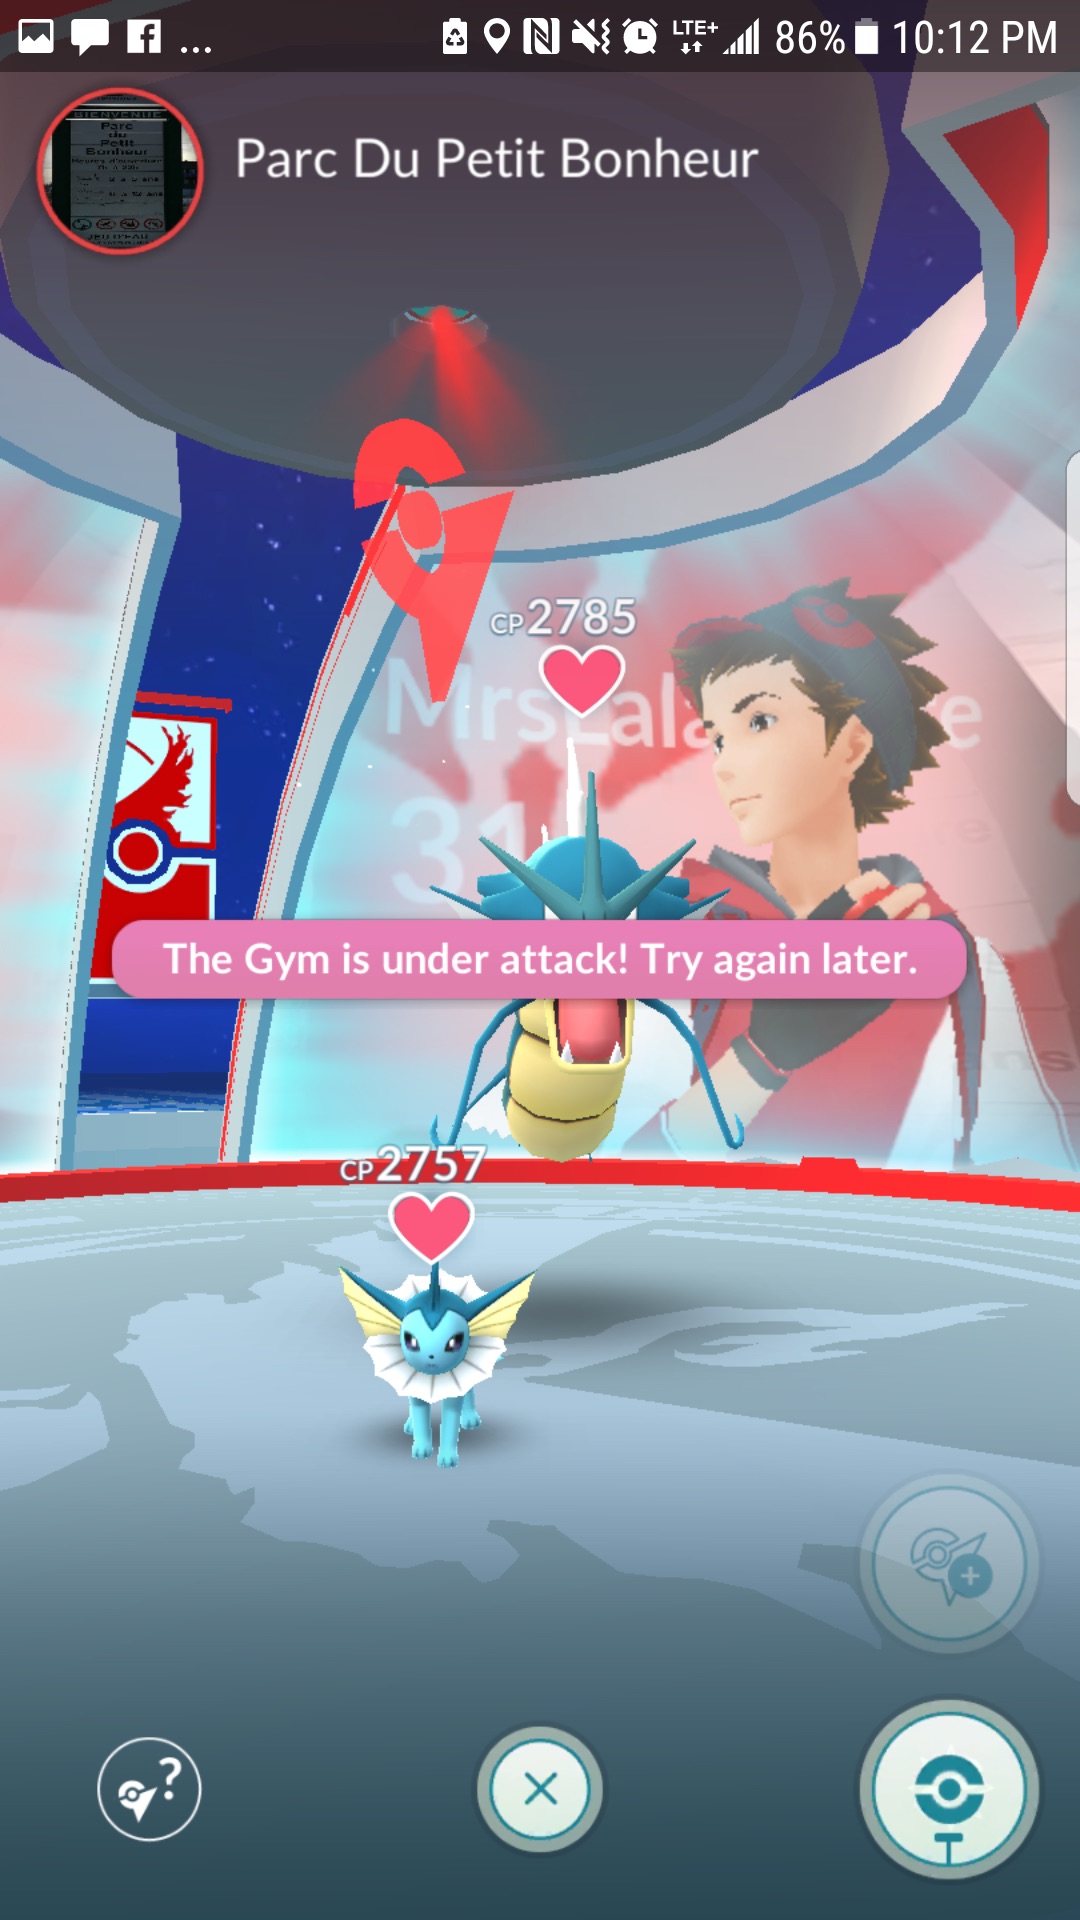 Pokemon Go Gym under attack